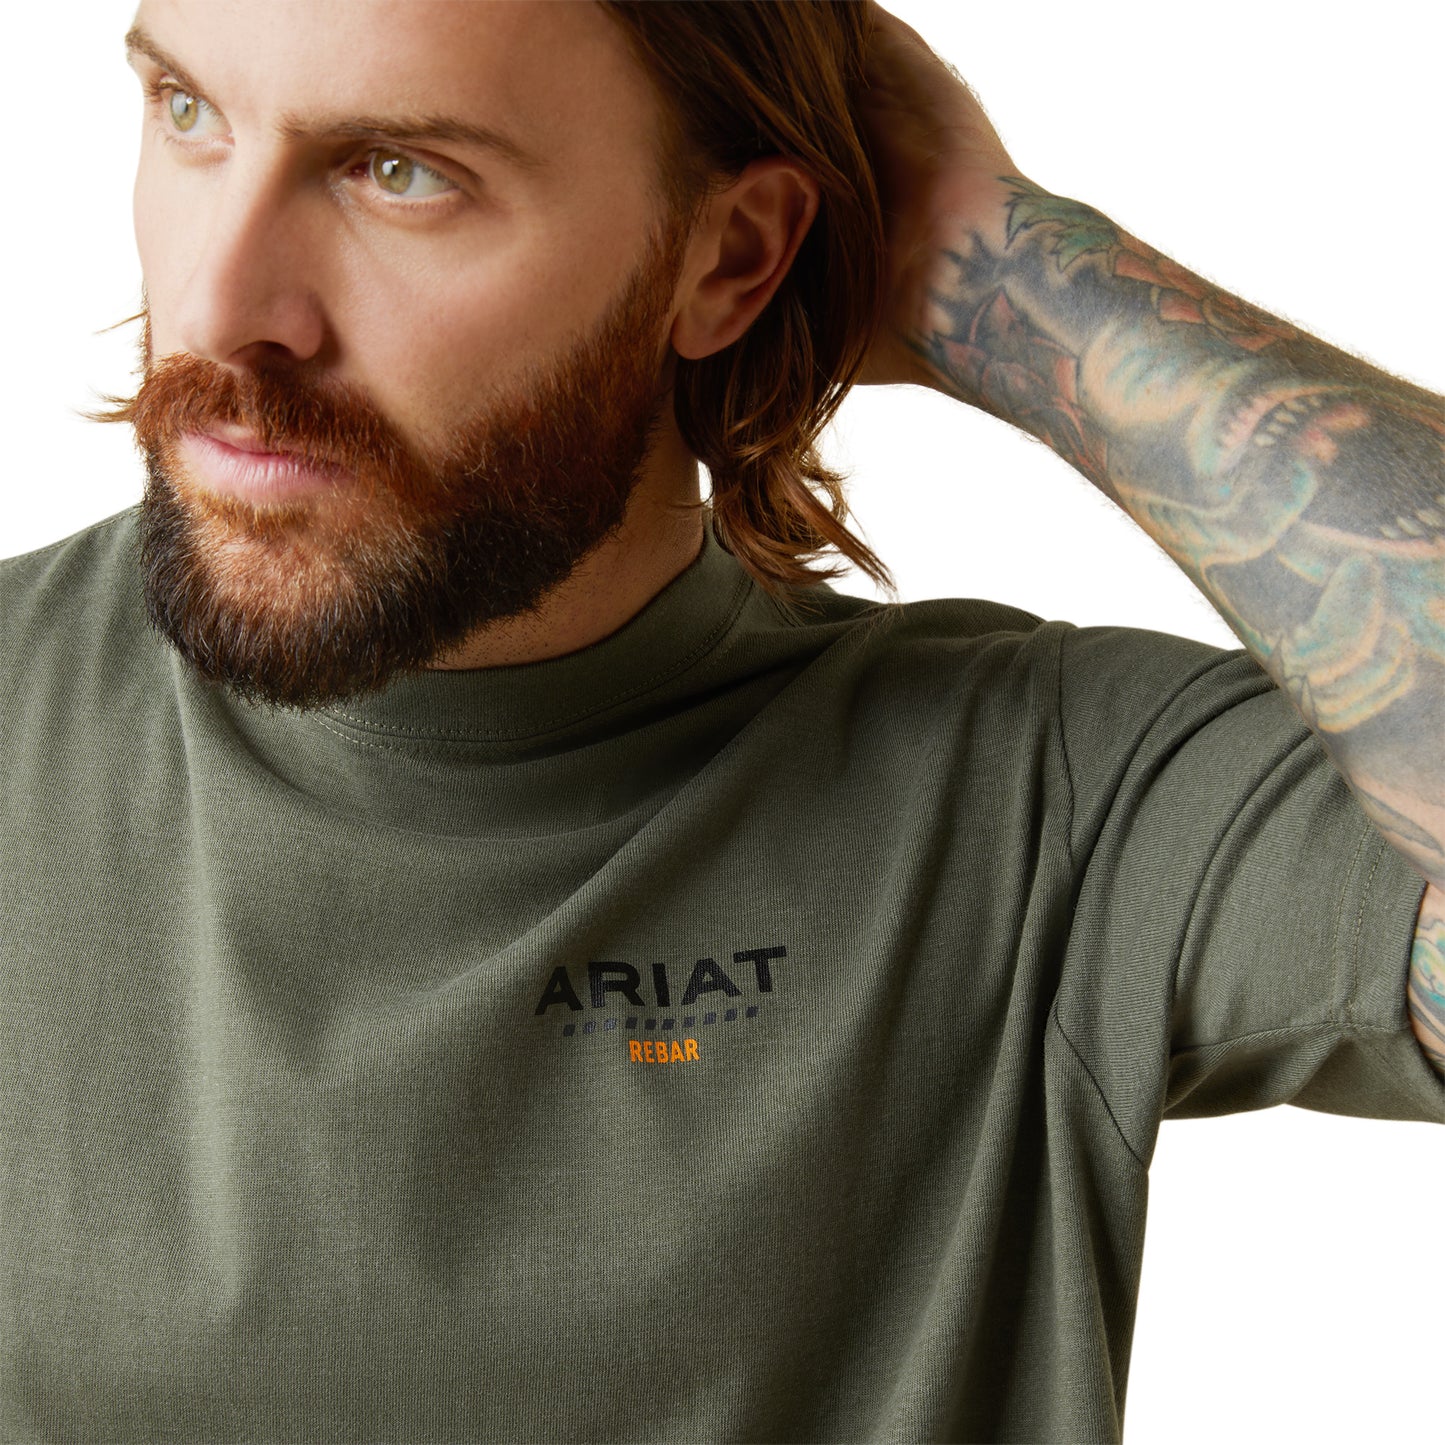 Ariat® Men's Rebar Cotton Strong™ Graphic Green Heather T-Shirt 10043488